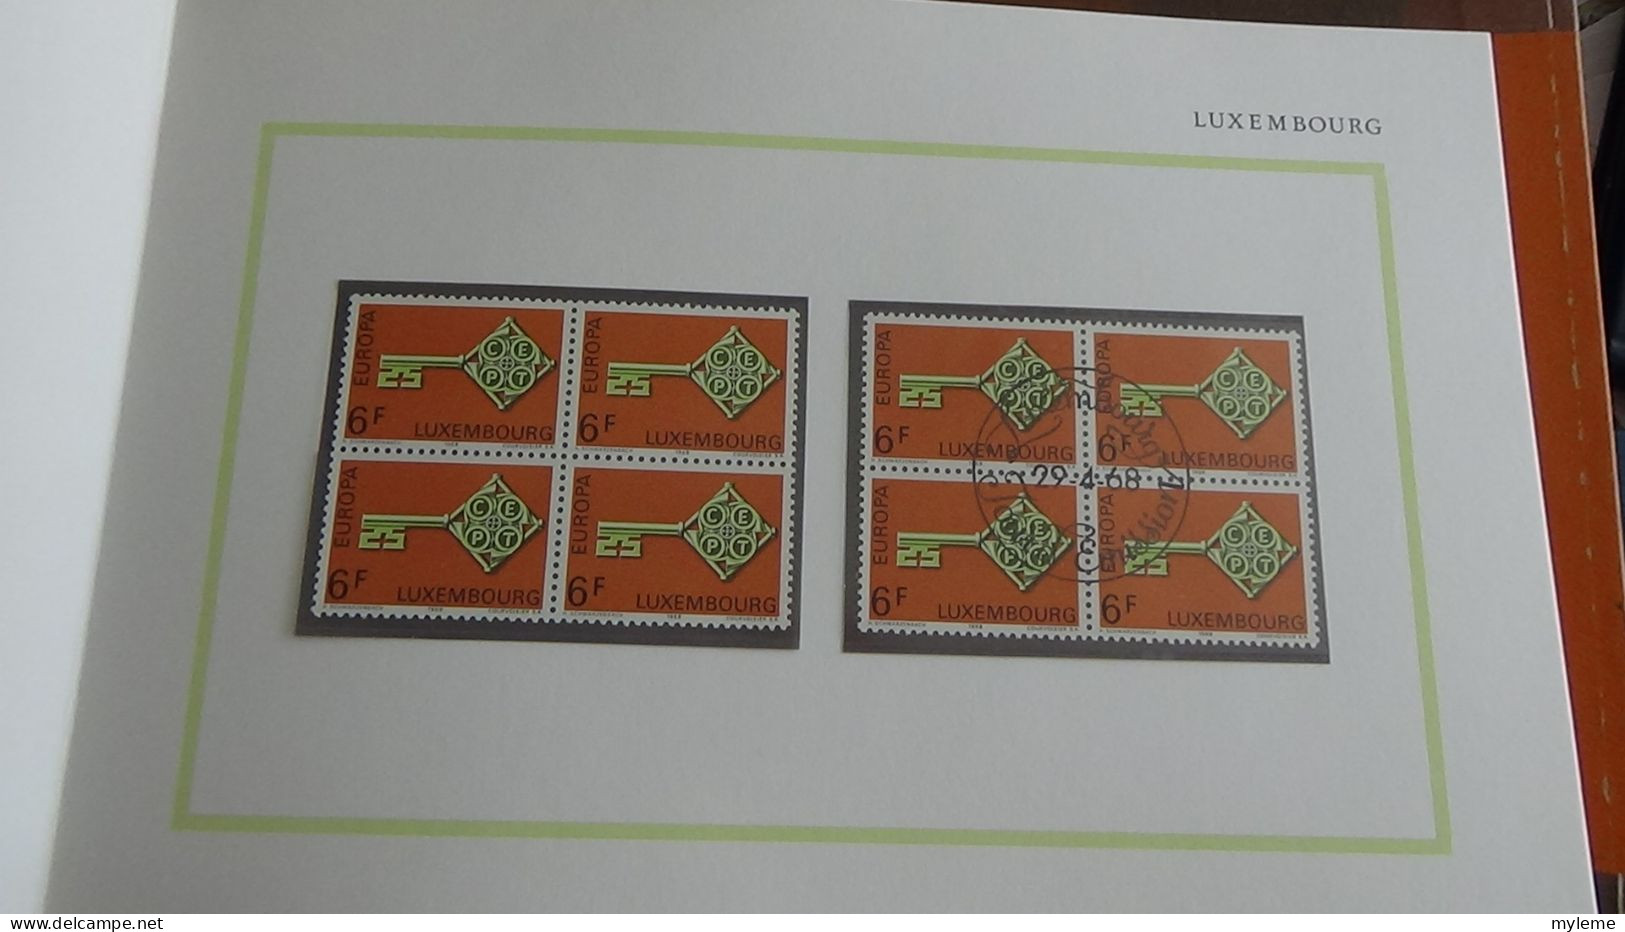 AZ148 Livre de timbres Europa 1968 en blocs de 4 ** + oblitérés. Cote des timbres ** 360 euros A saisir !!